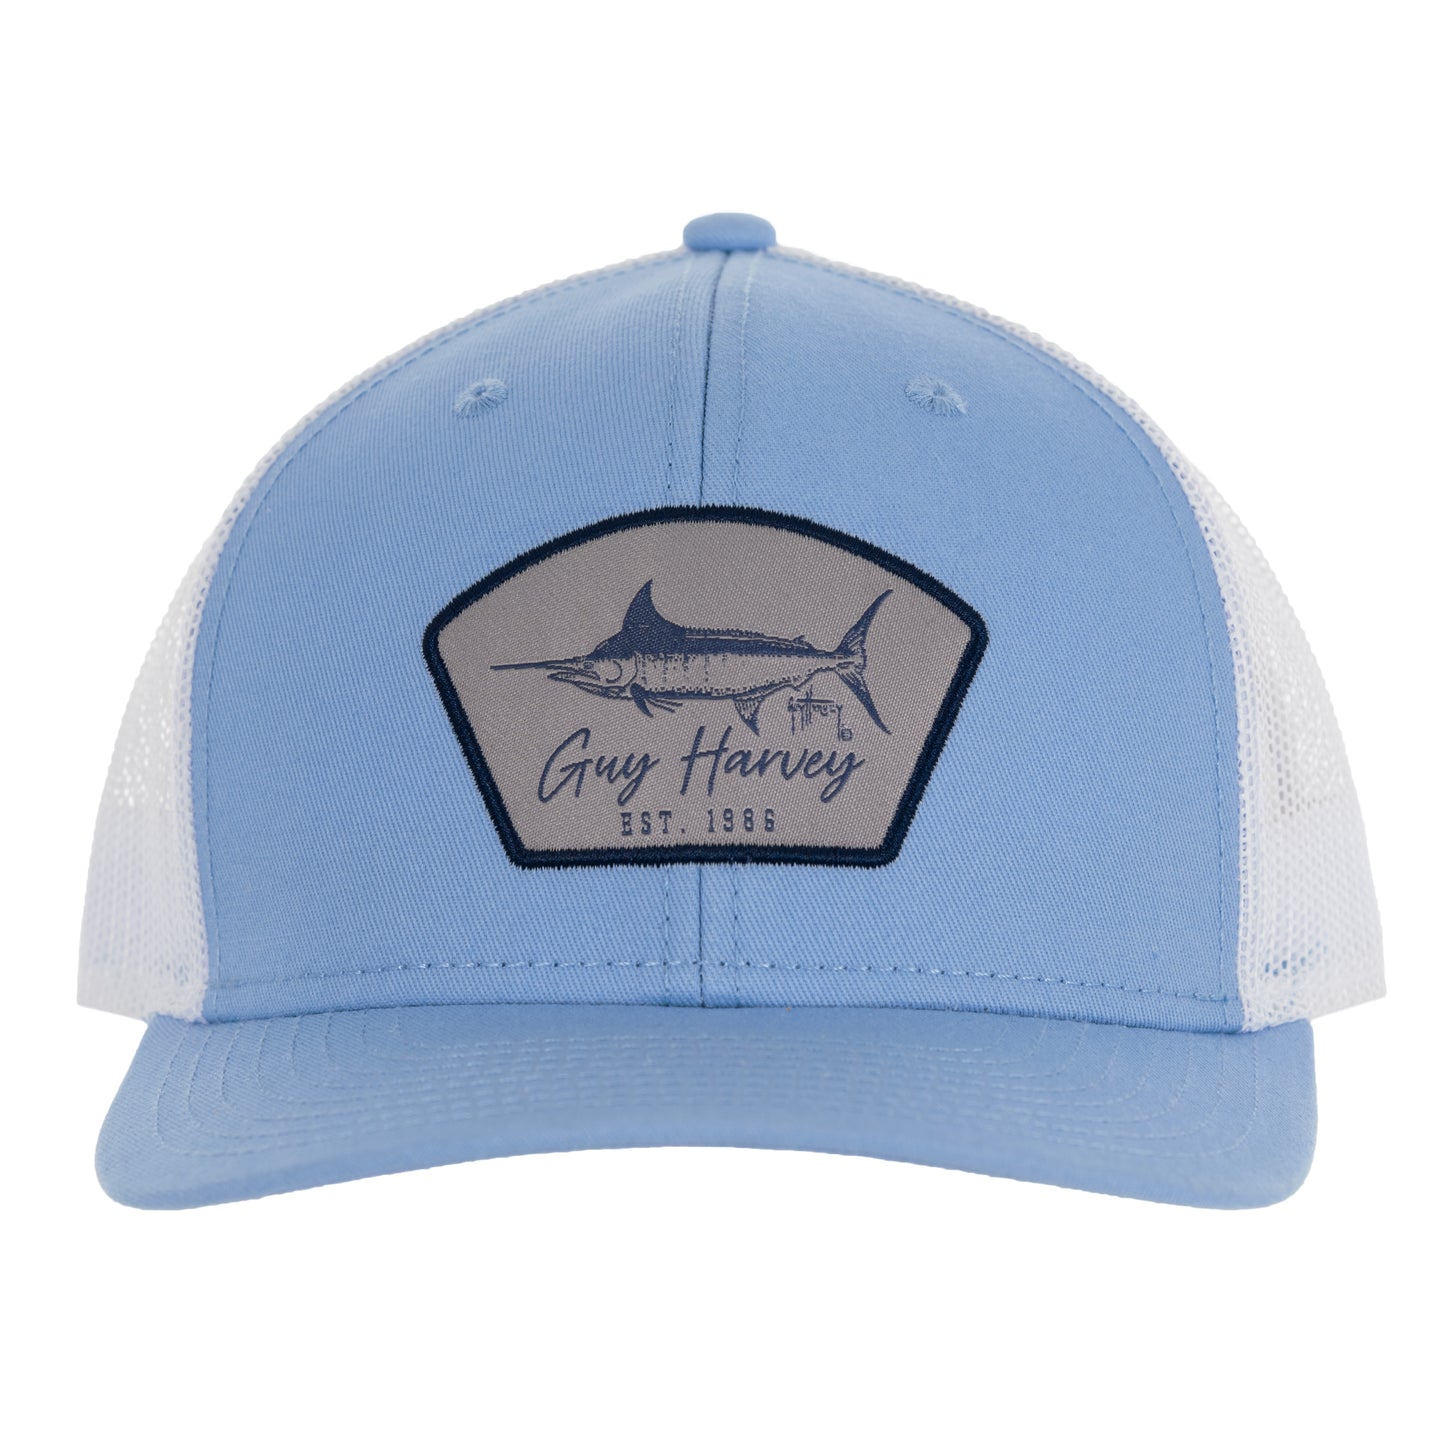 Guy Harvey Striper Fish Hat - Blue Tan - Men's Size Hook & Loop Strap